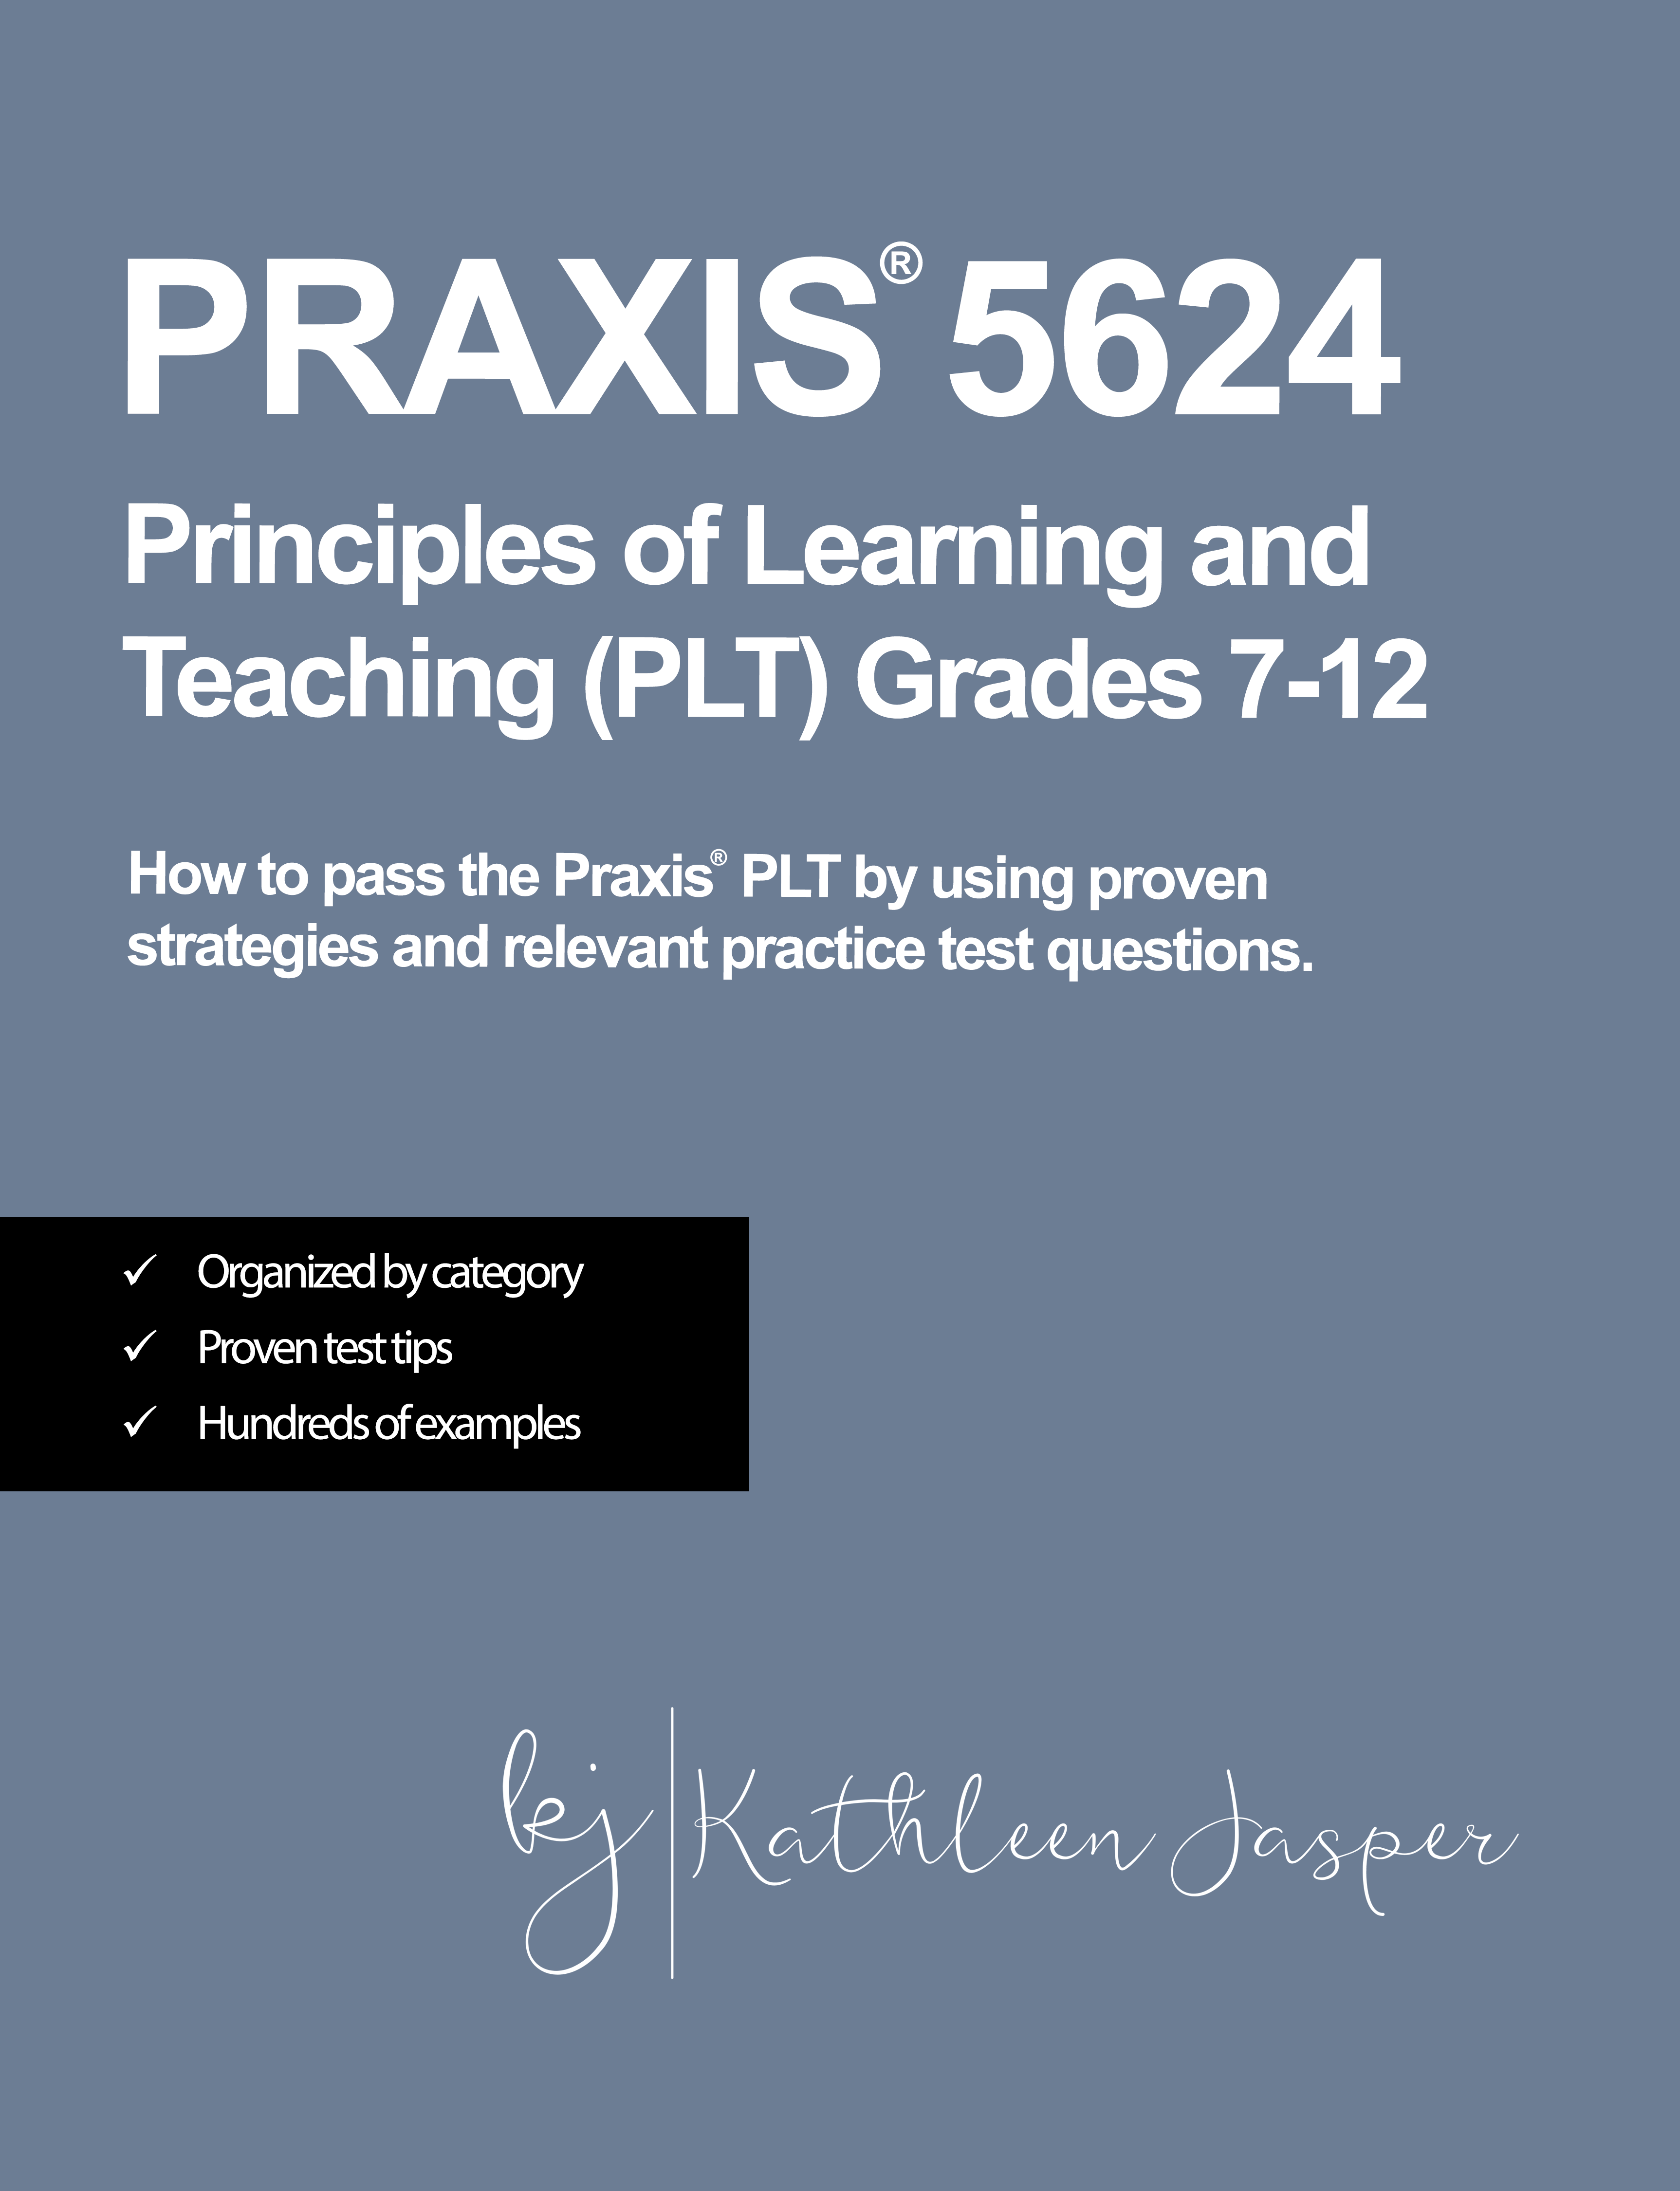 Praxis PLT 7-12 (5624) Digital Study Guide